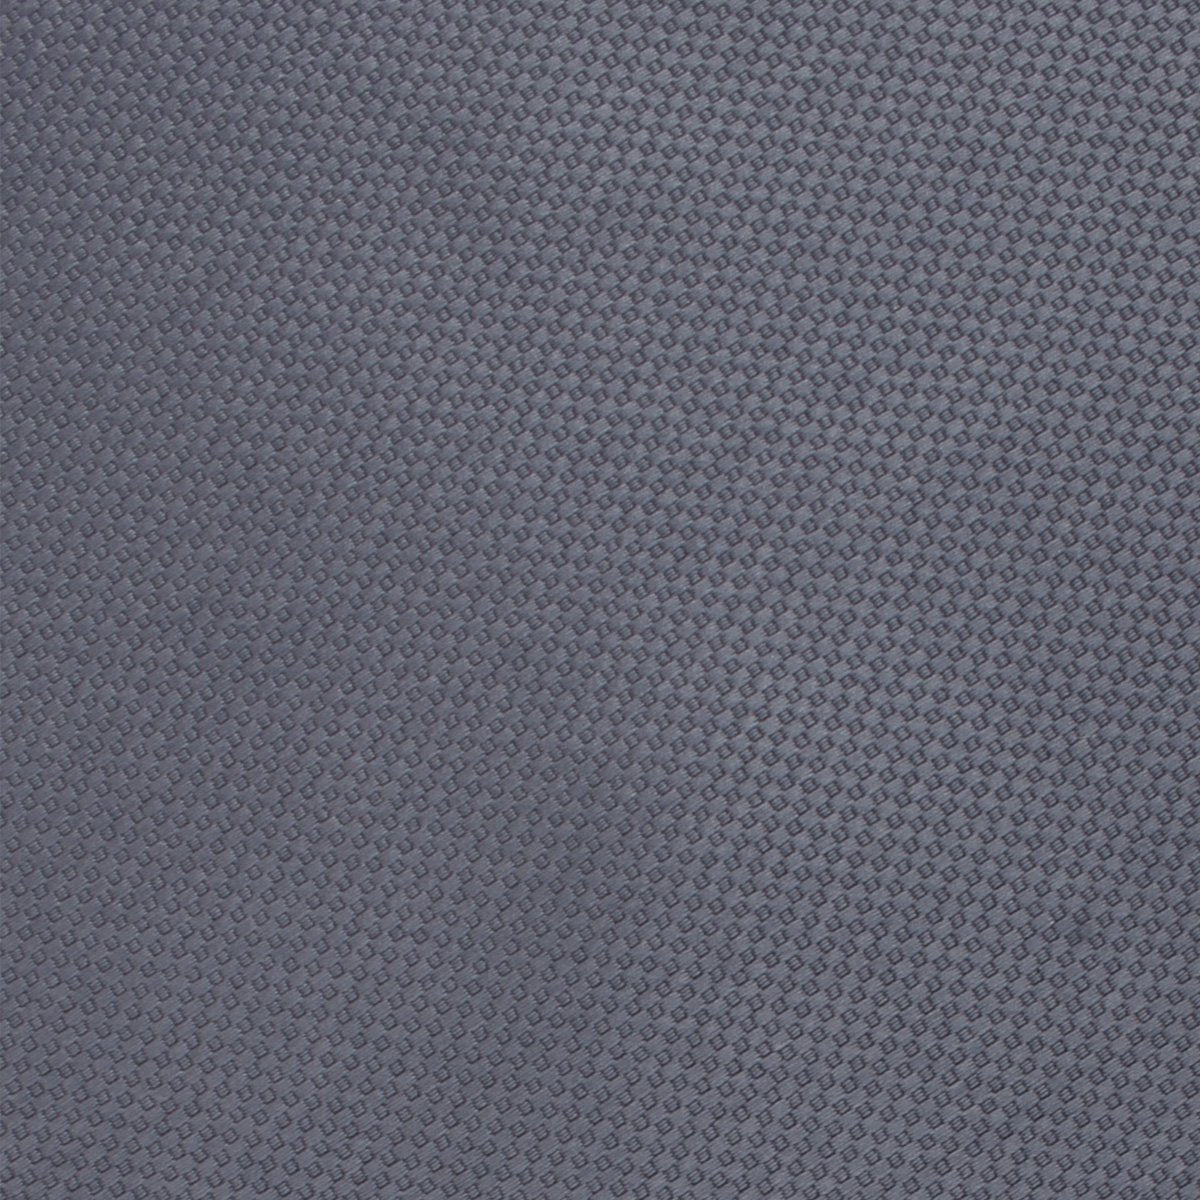 Slate Grey Charcoal Basket Weave Skinny Tie Fabric